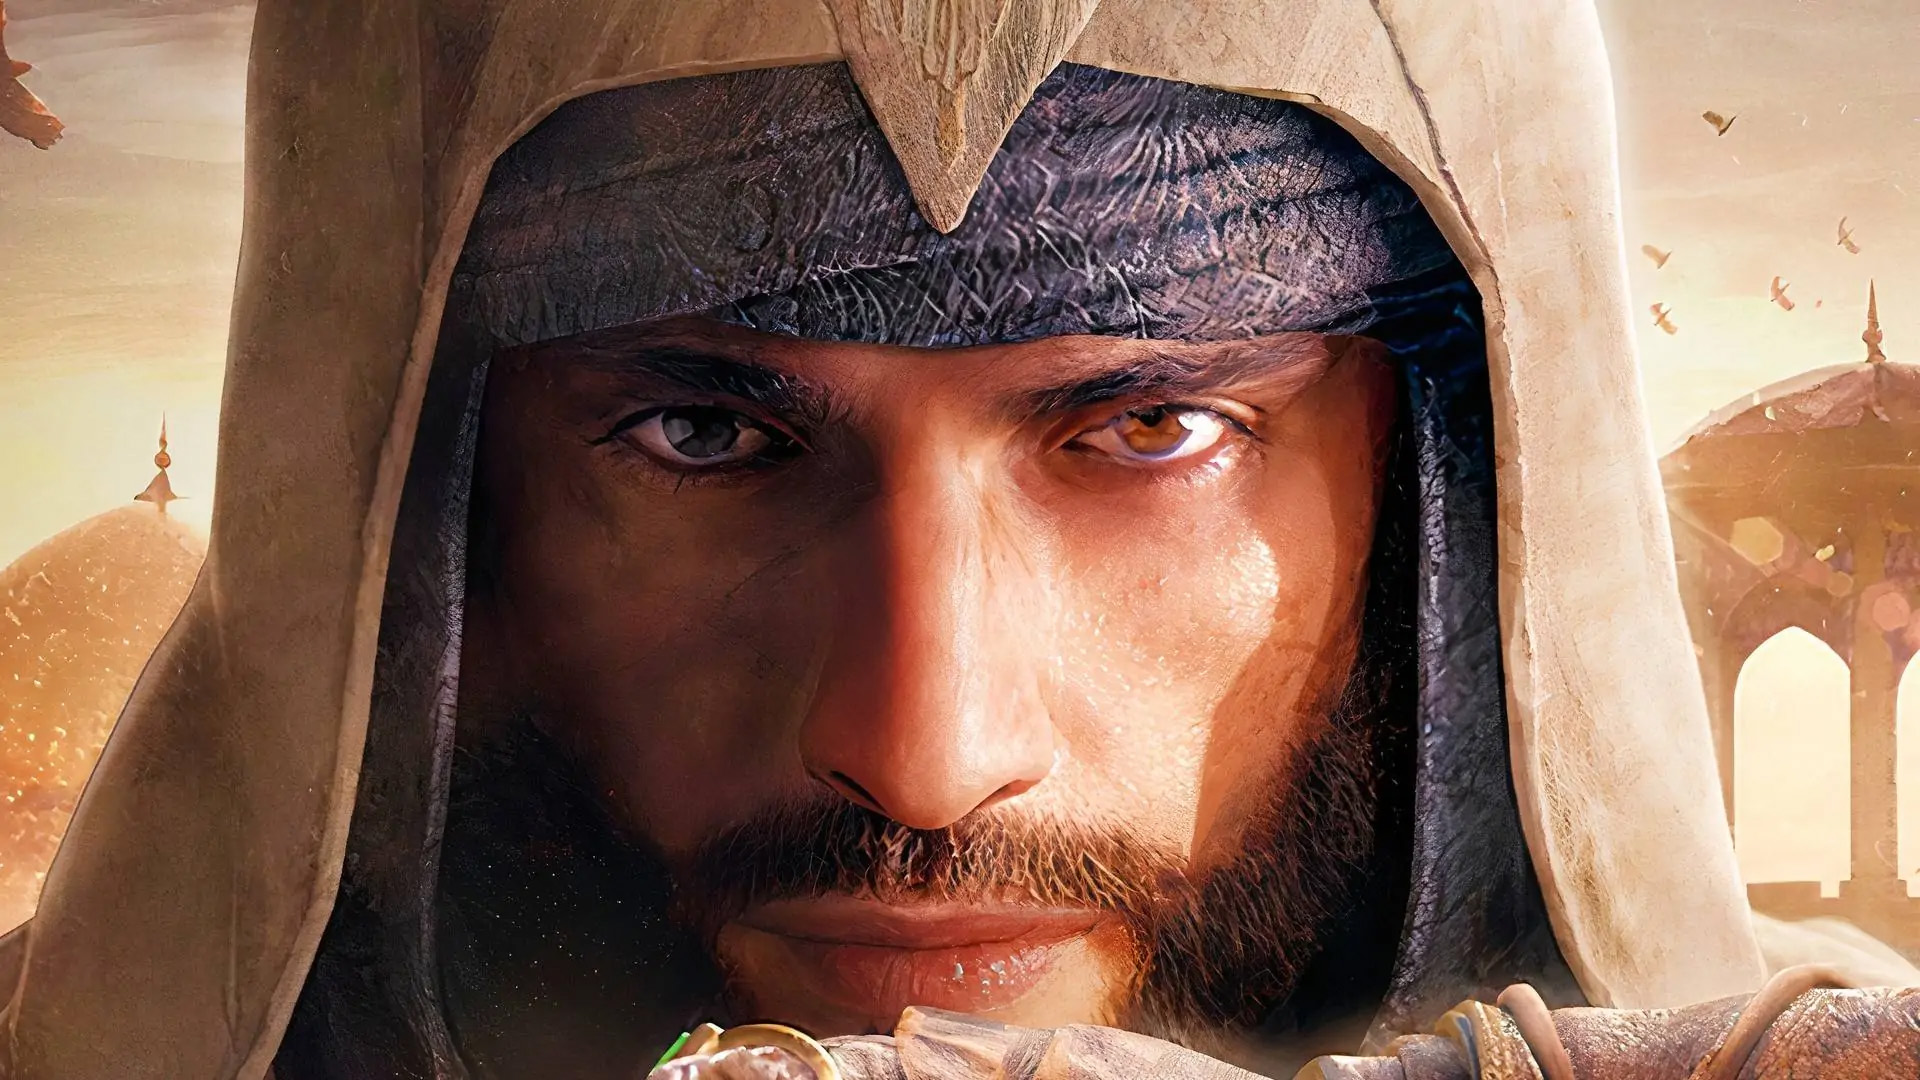 Por que 'Assassin's Creed Mirage' vai na contramão dos games blockbusters, Eu 